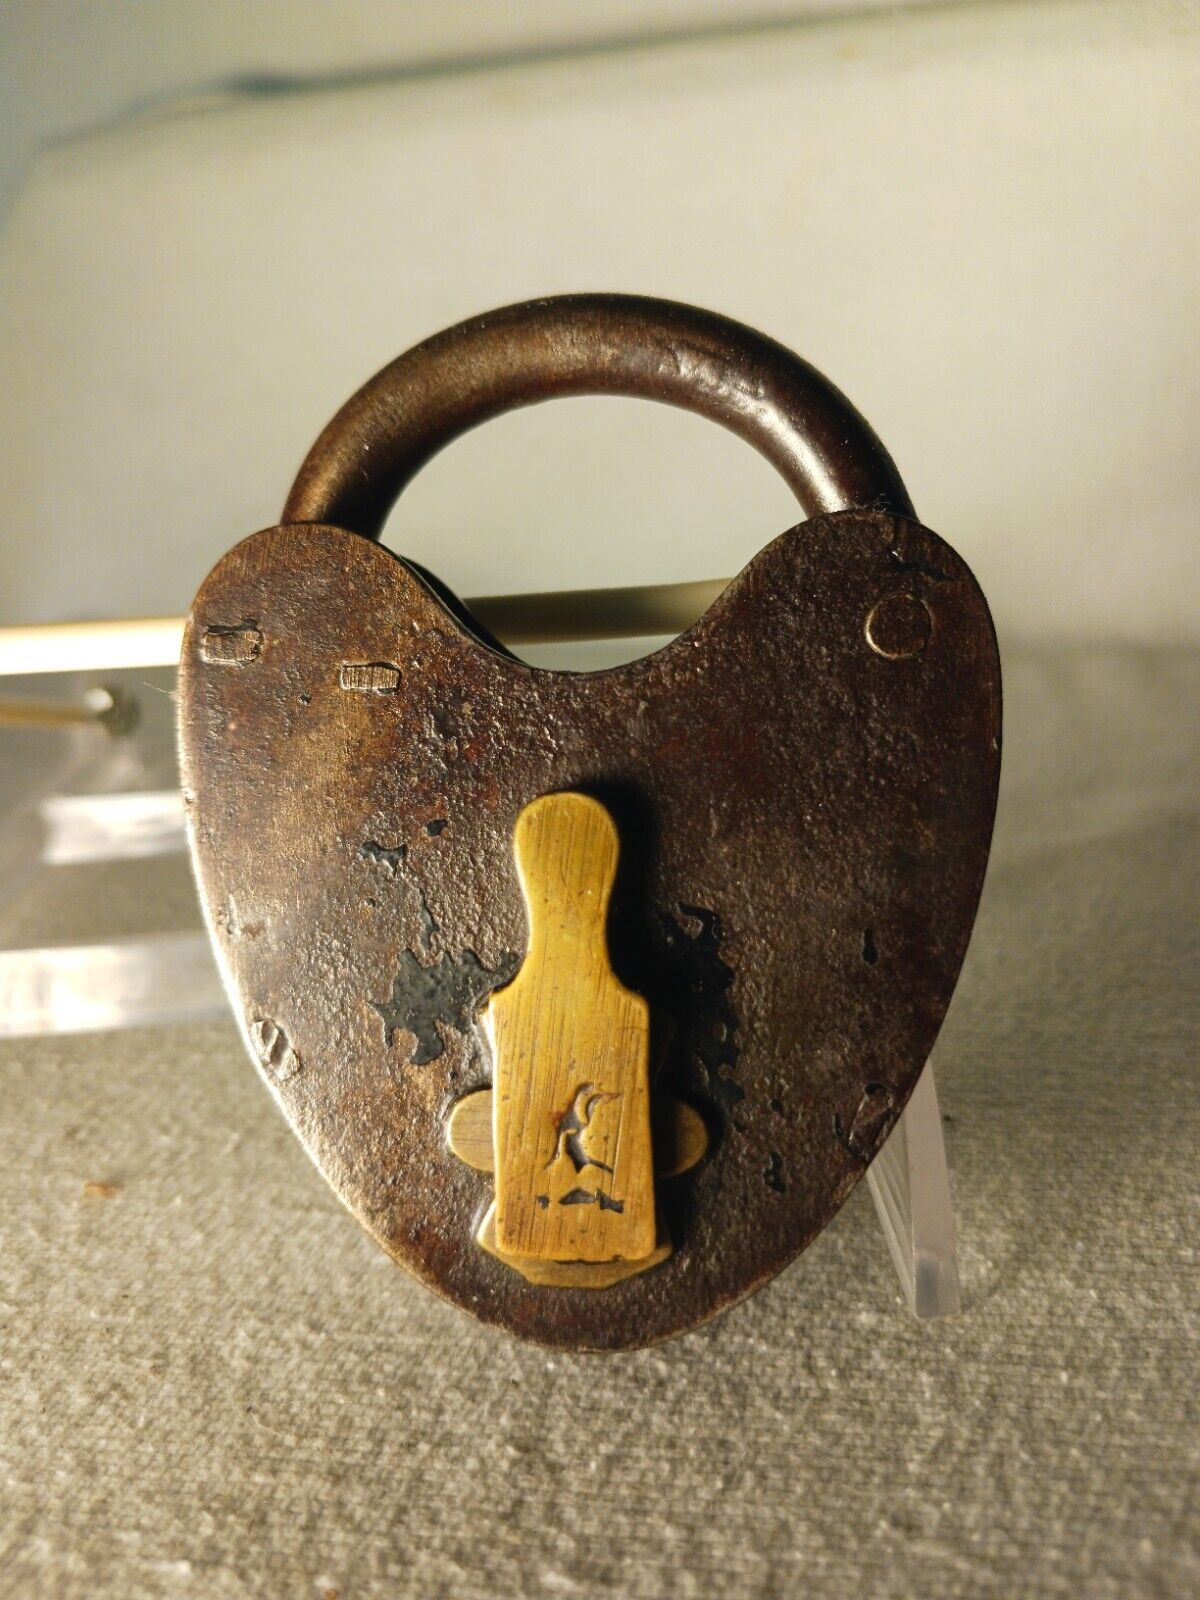 Antique Heart Shaped Padlock No Key For Lock Vintage D M & Co?